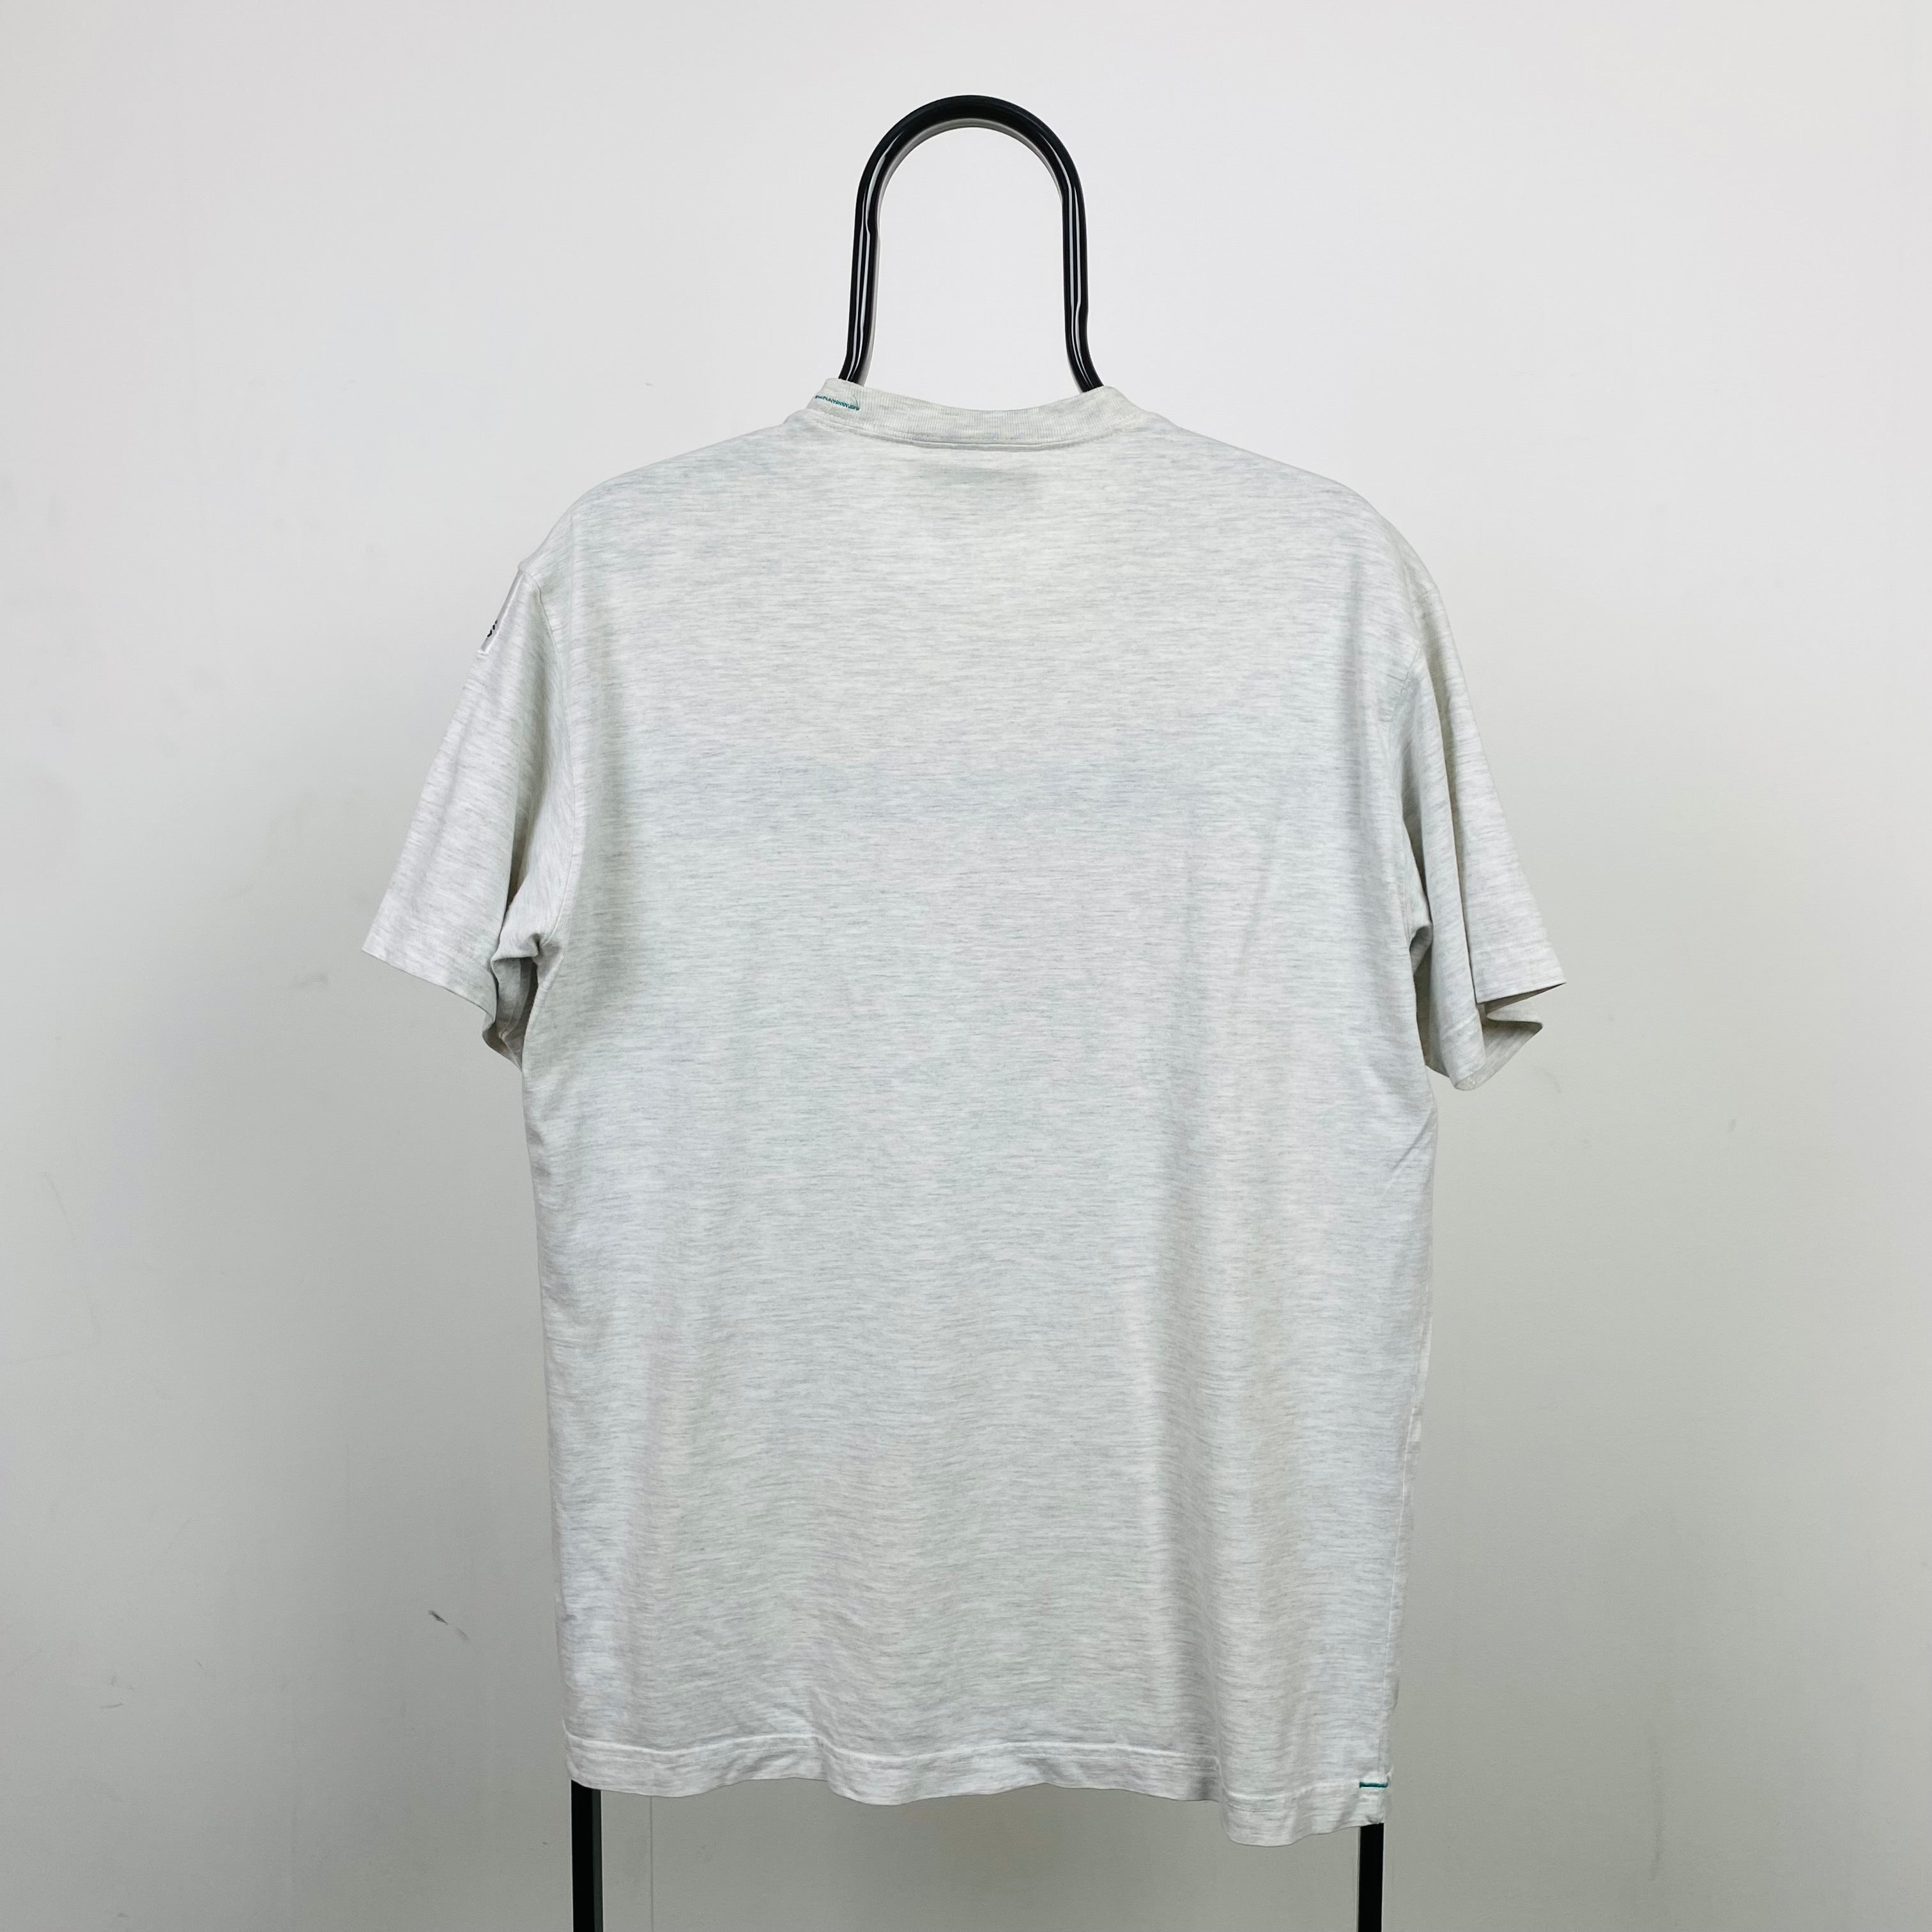 90s Adidas Equipment T-Shirt Grey Small